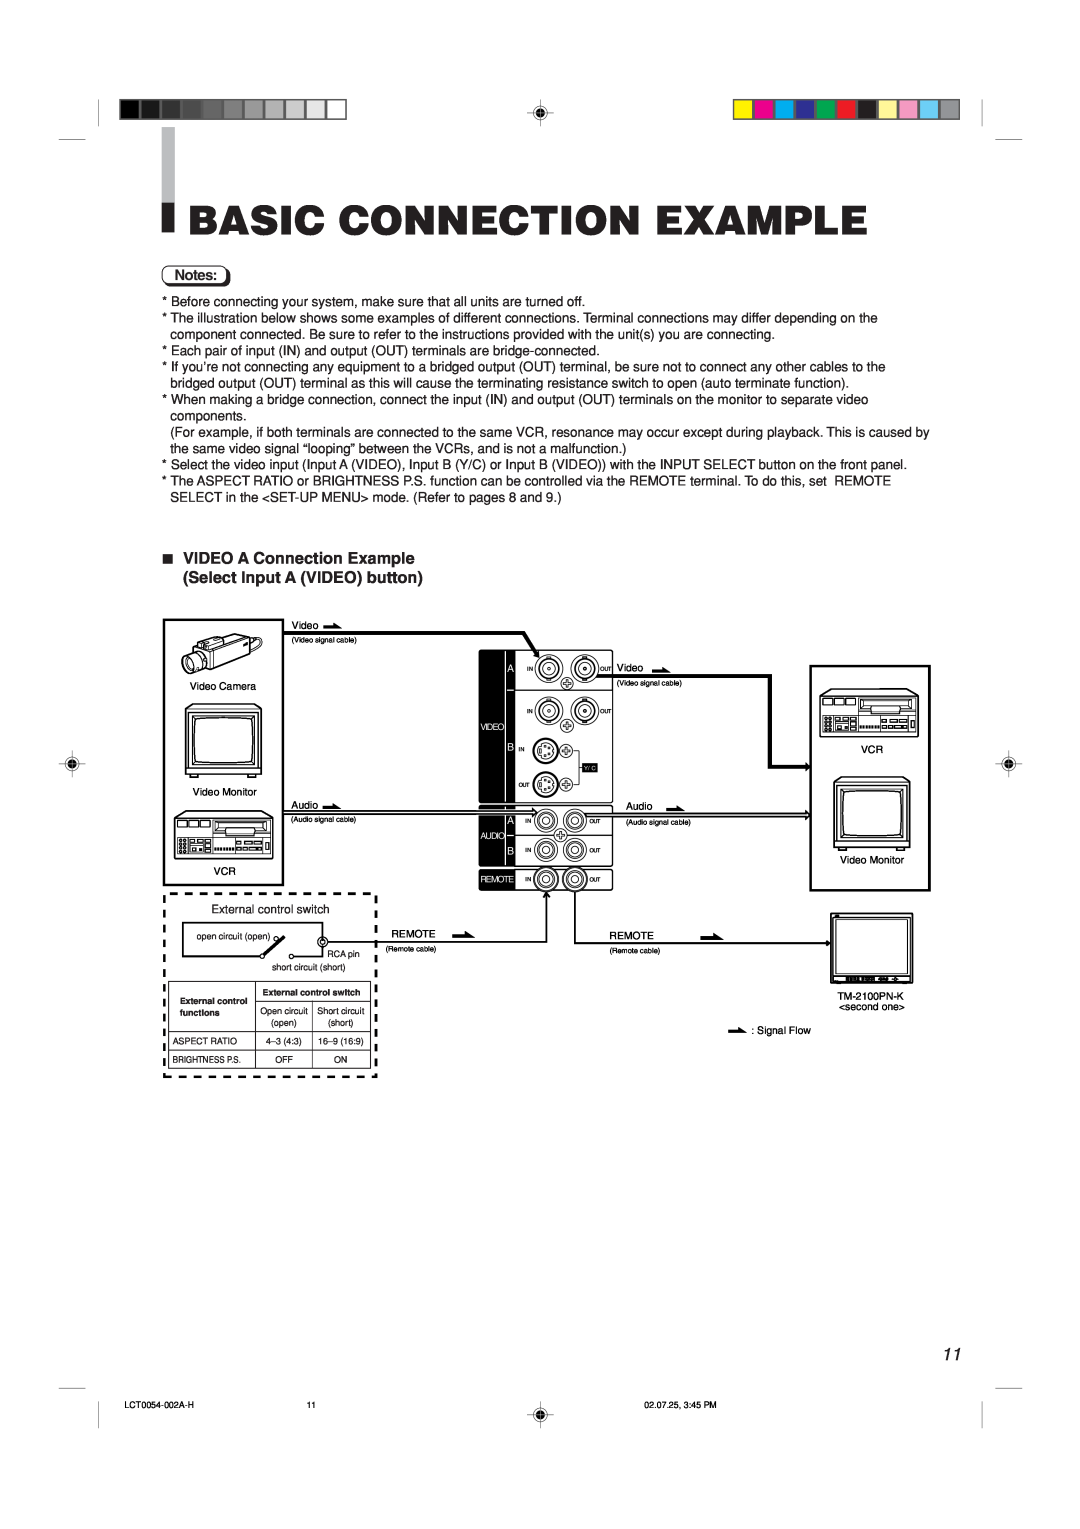 JVC TM-2100PN-K manual Basic Connection Example, VIDEO A Connection Example Select Input A VIDEO button 